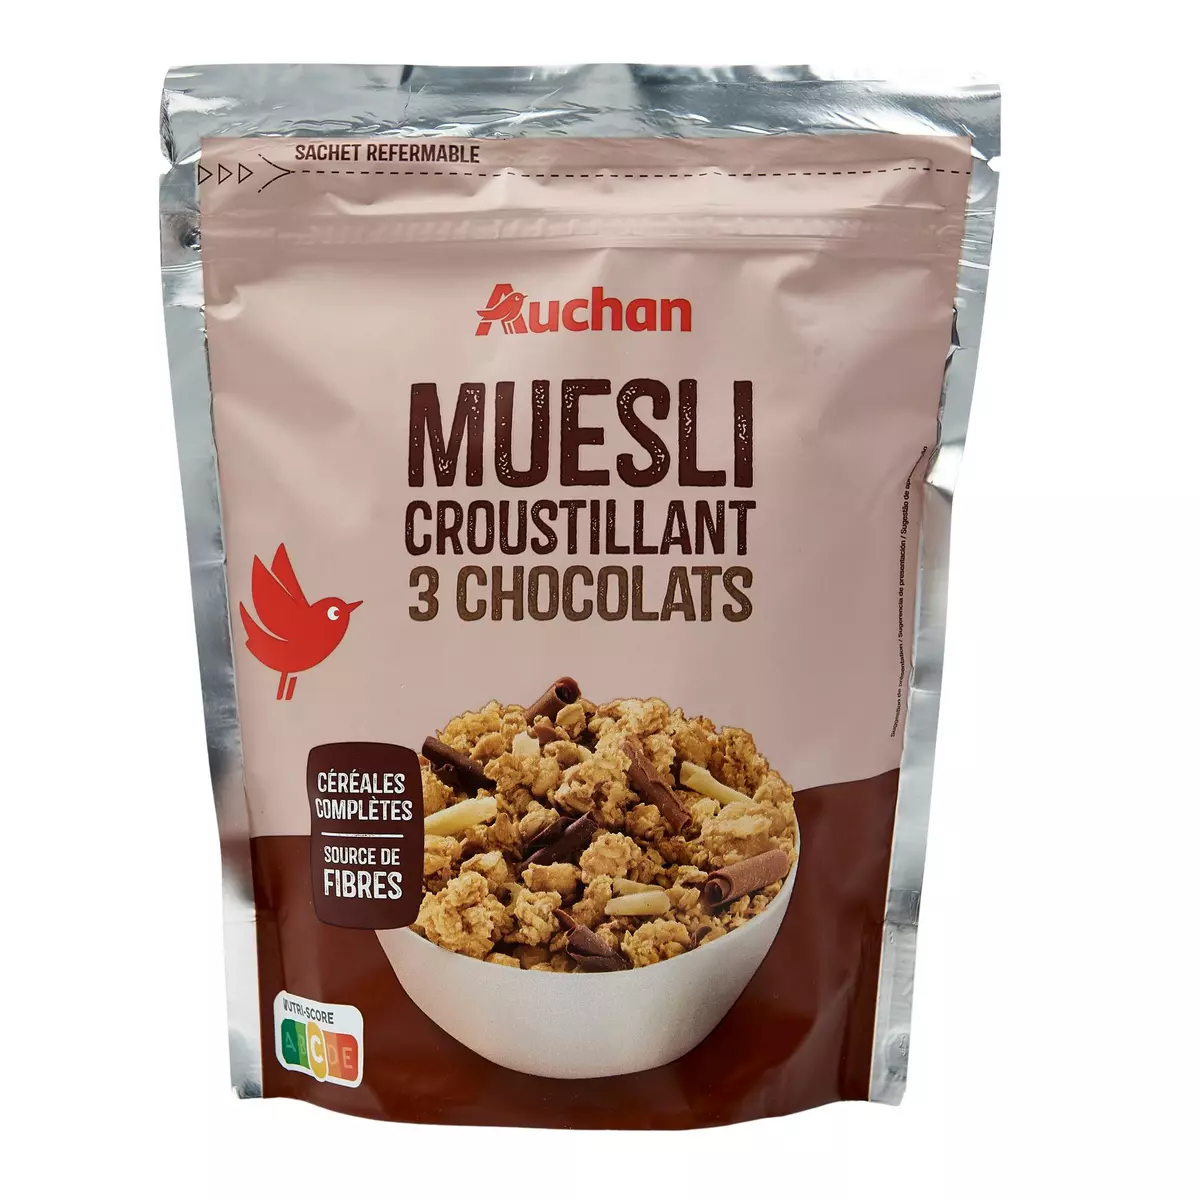 AUCHAN Muesli croustillant 3 chocolats 450g